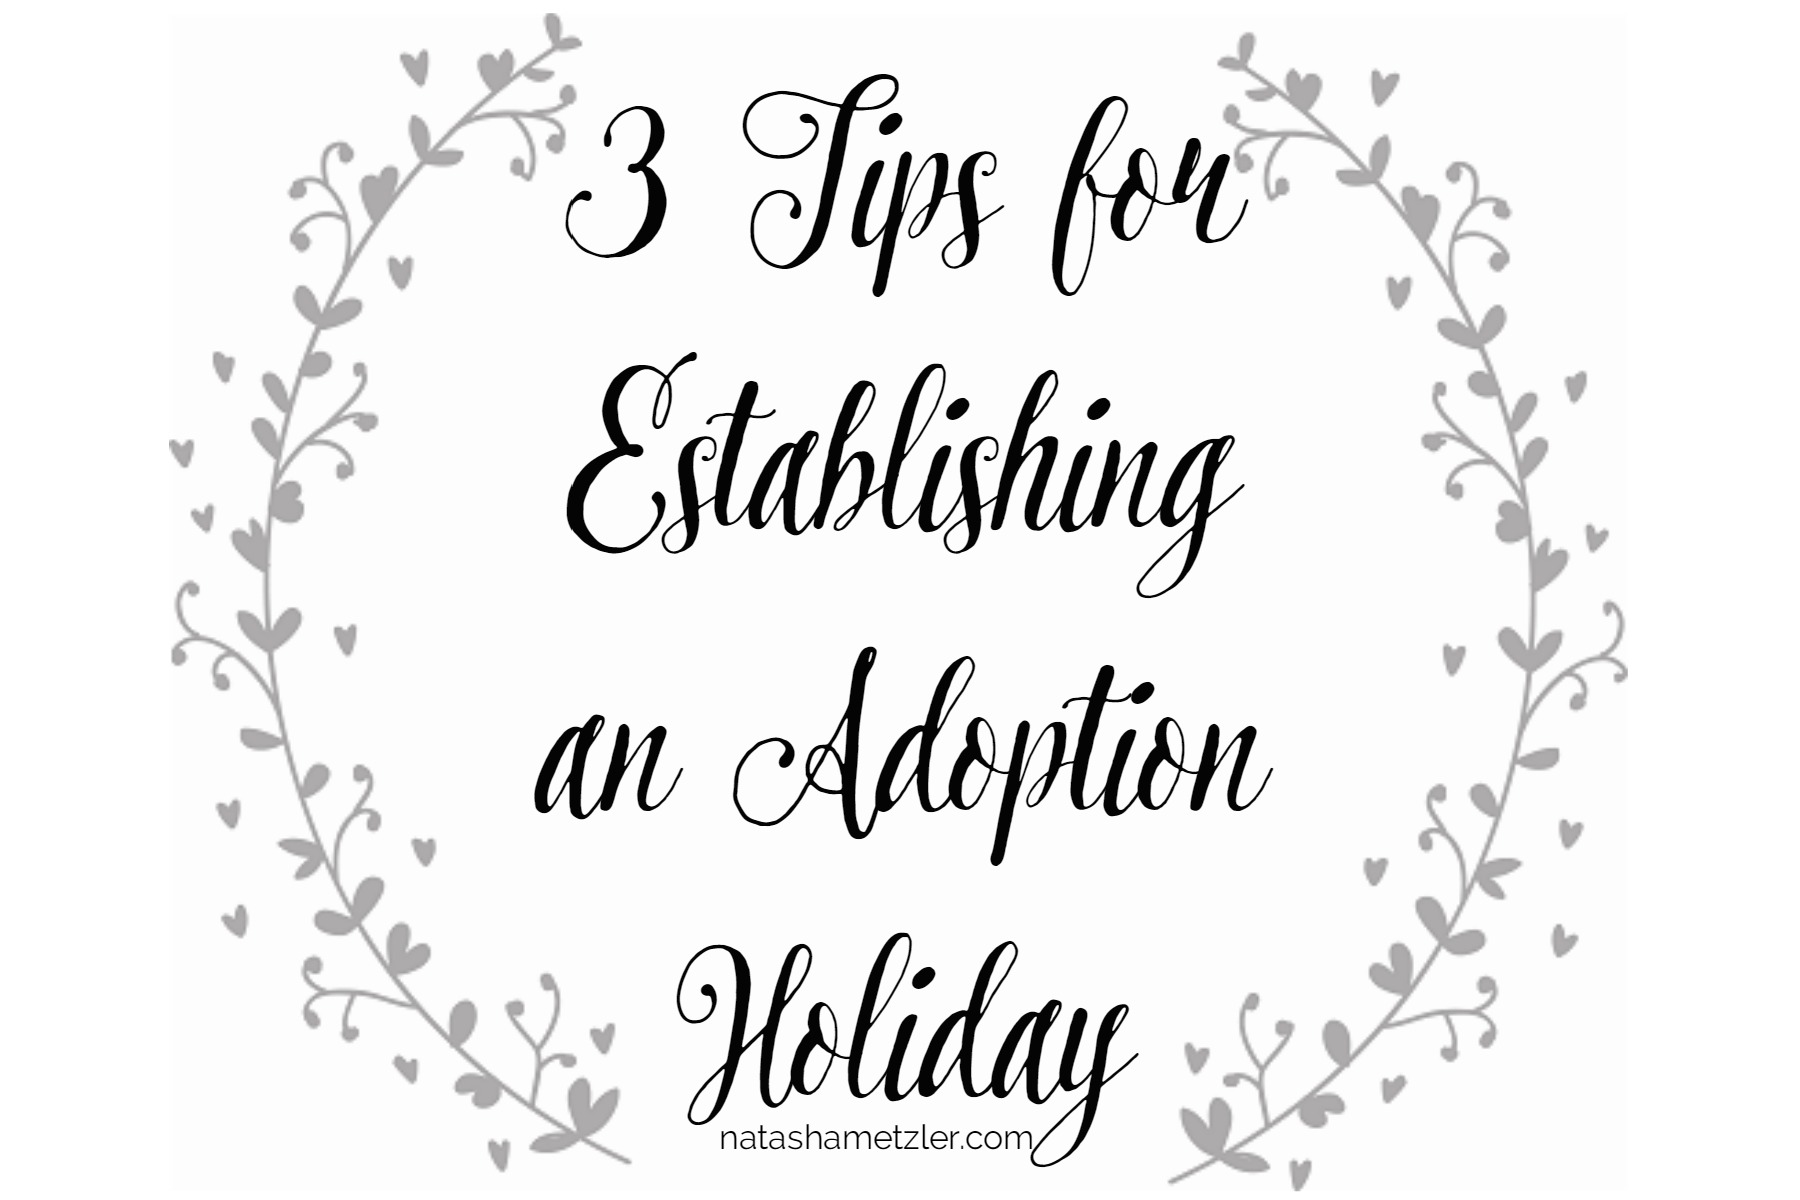 3 Tips for Establishing an Adoption Holiday